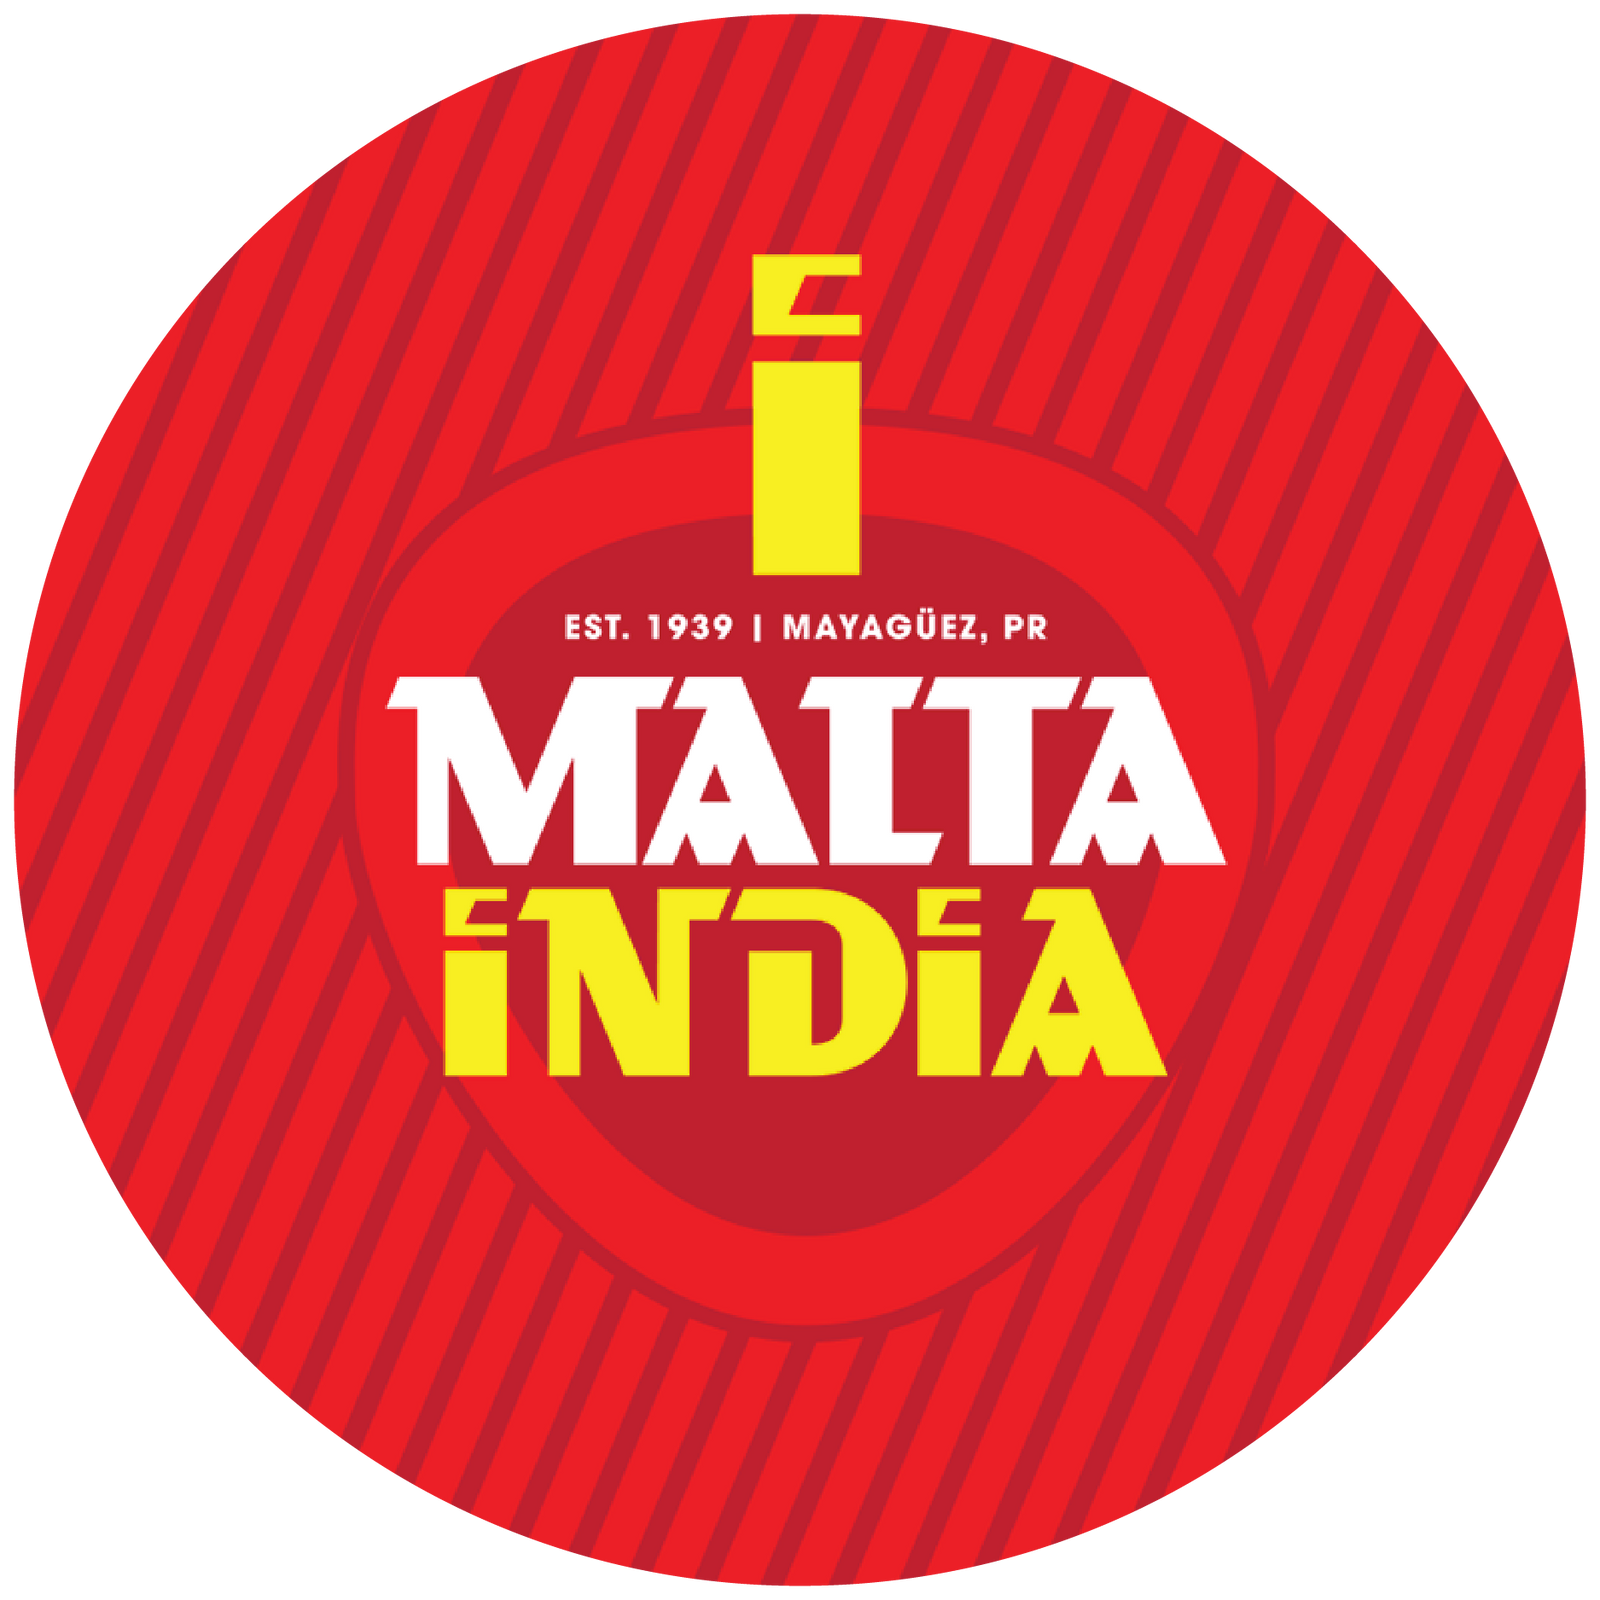 Malta India (Malt Beverage)